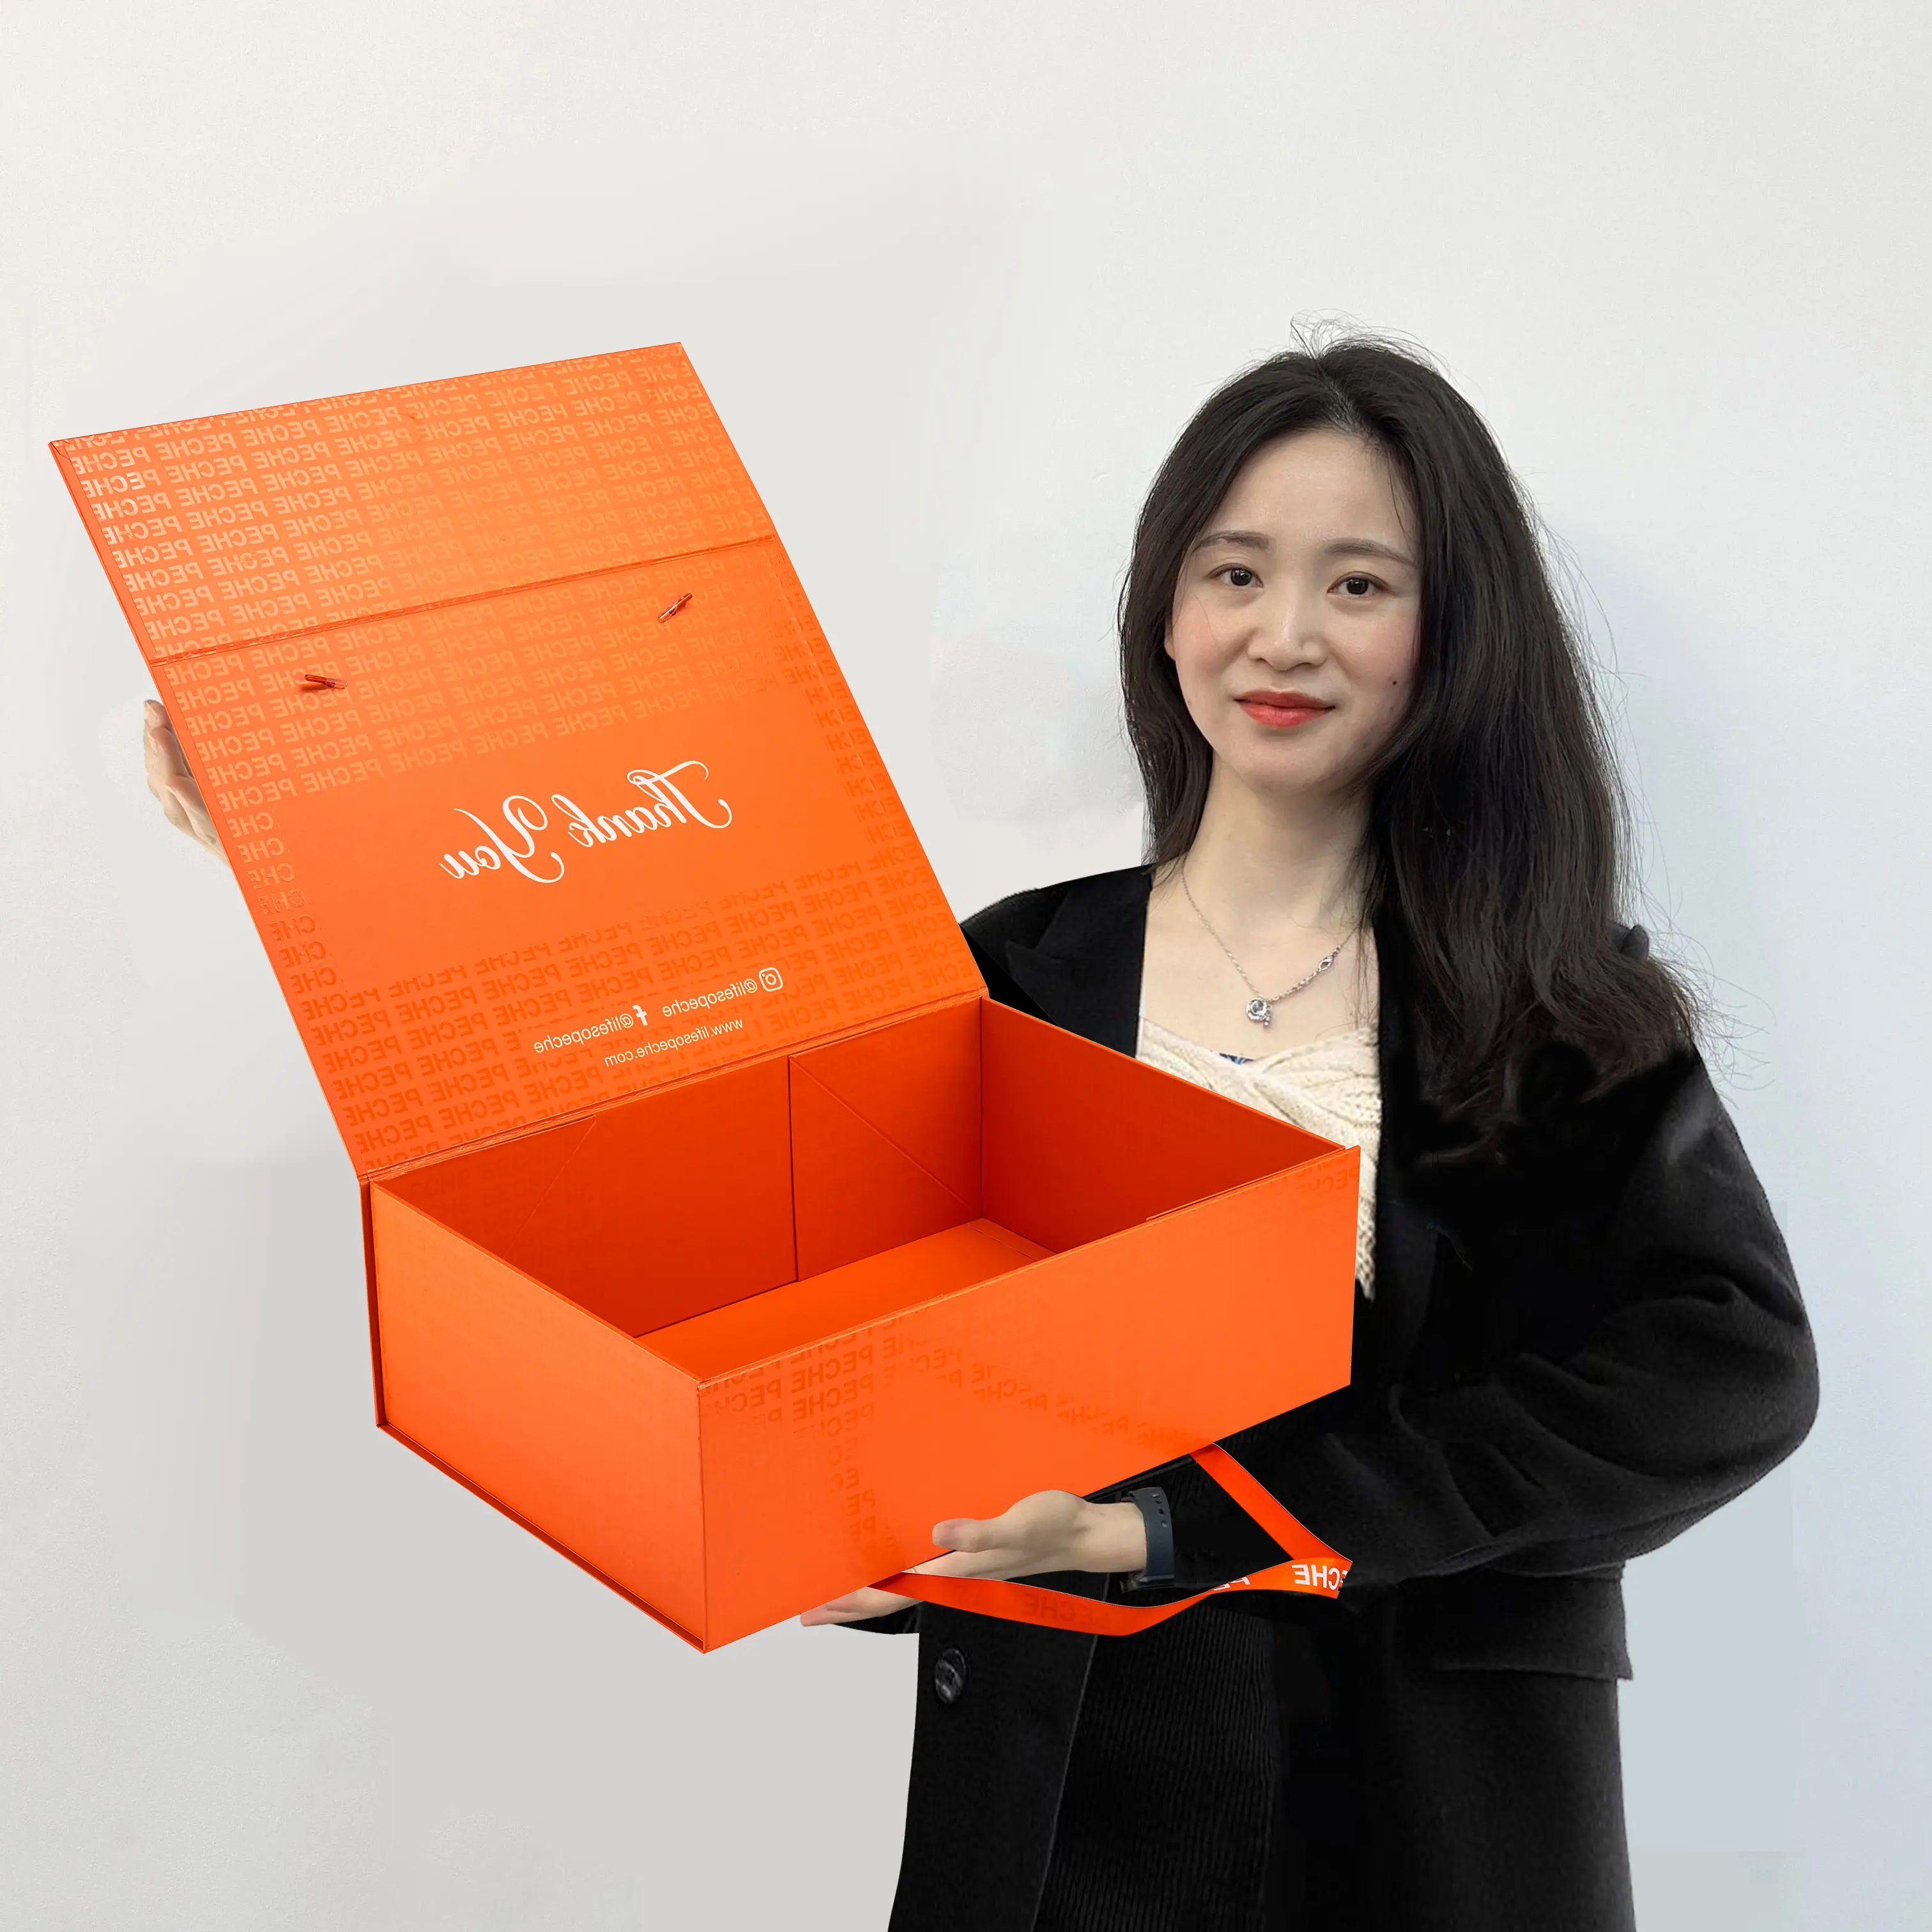 Black Wholesale Custom Logo Premium Gift Box Luxury Large Package Cardboard Paper Wig Hair Extension Magnetic Packaging Box